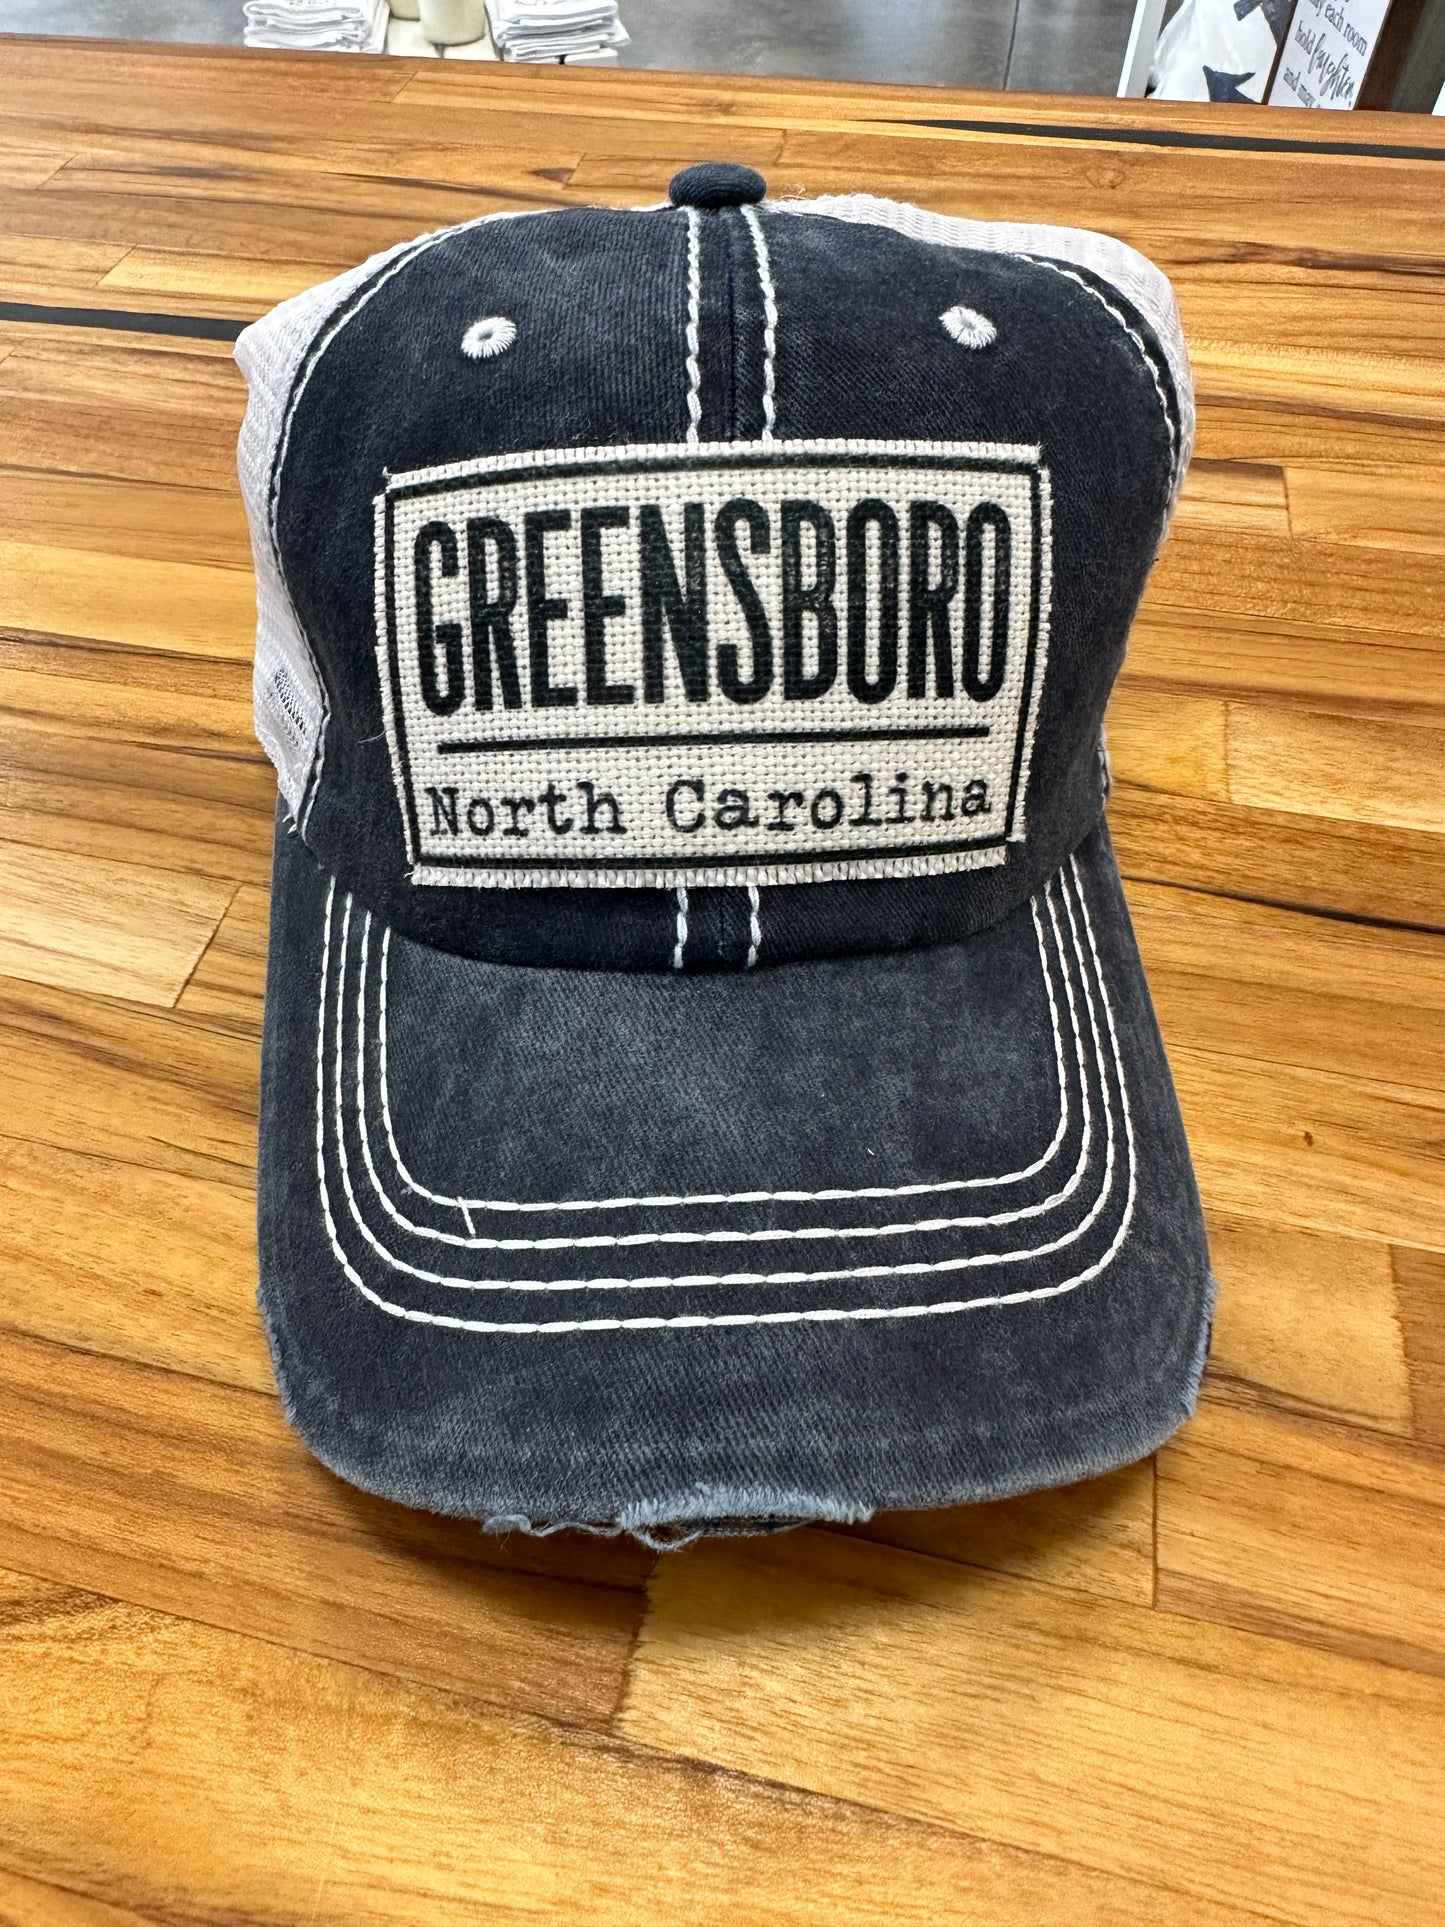 dkhandmade - Greensboro Blue and White Mesh Hat